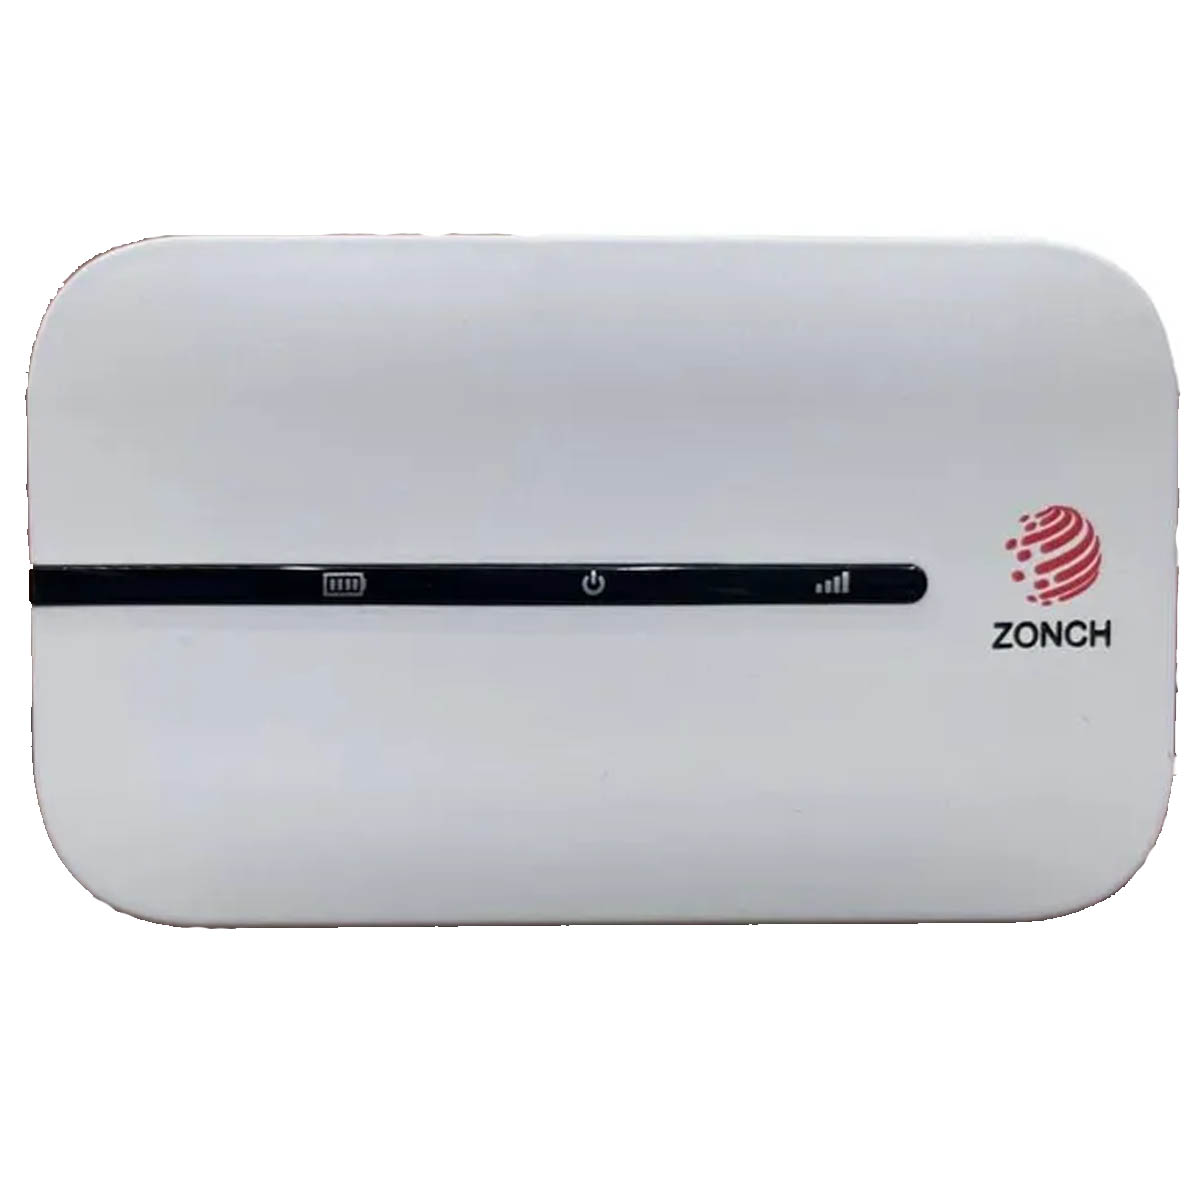 Беспроводной 4G модем ZONCH Е160, WiFi, цвет белый